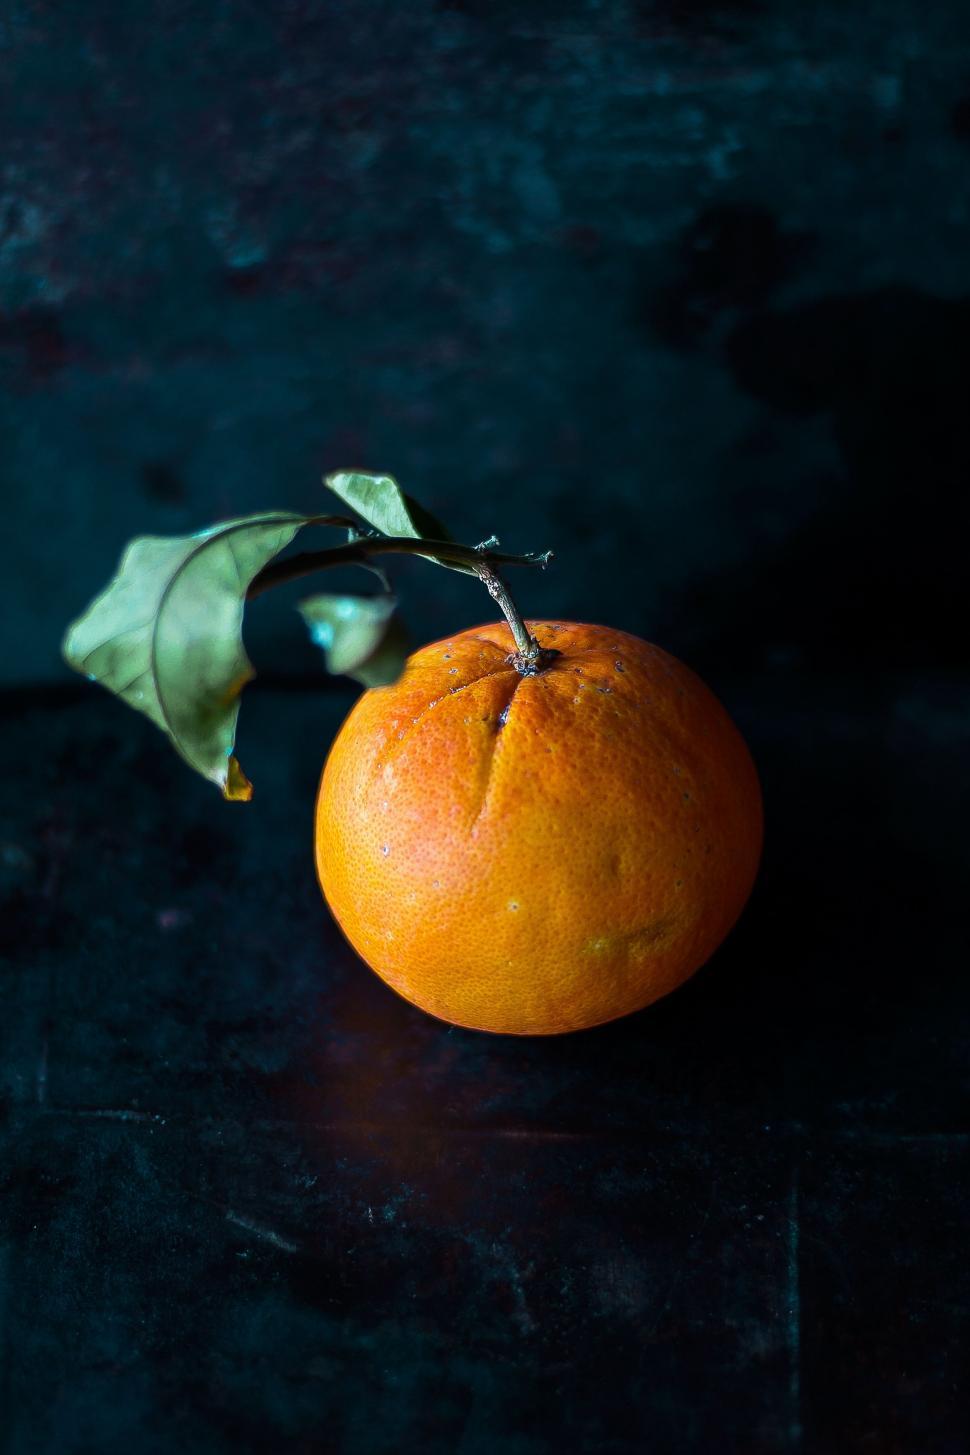 Free Image of Orange With Leaf on Table 